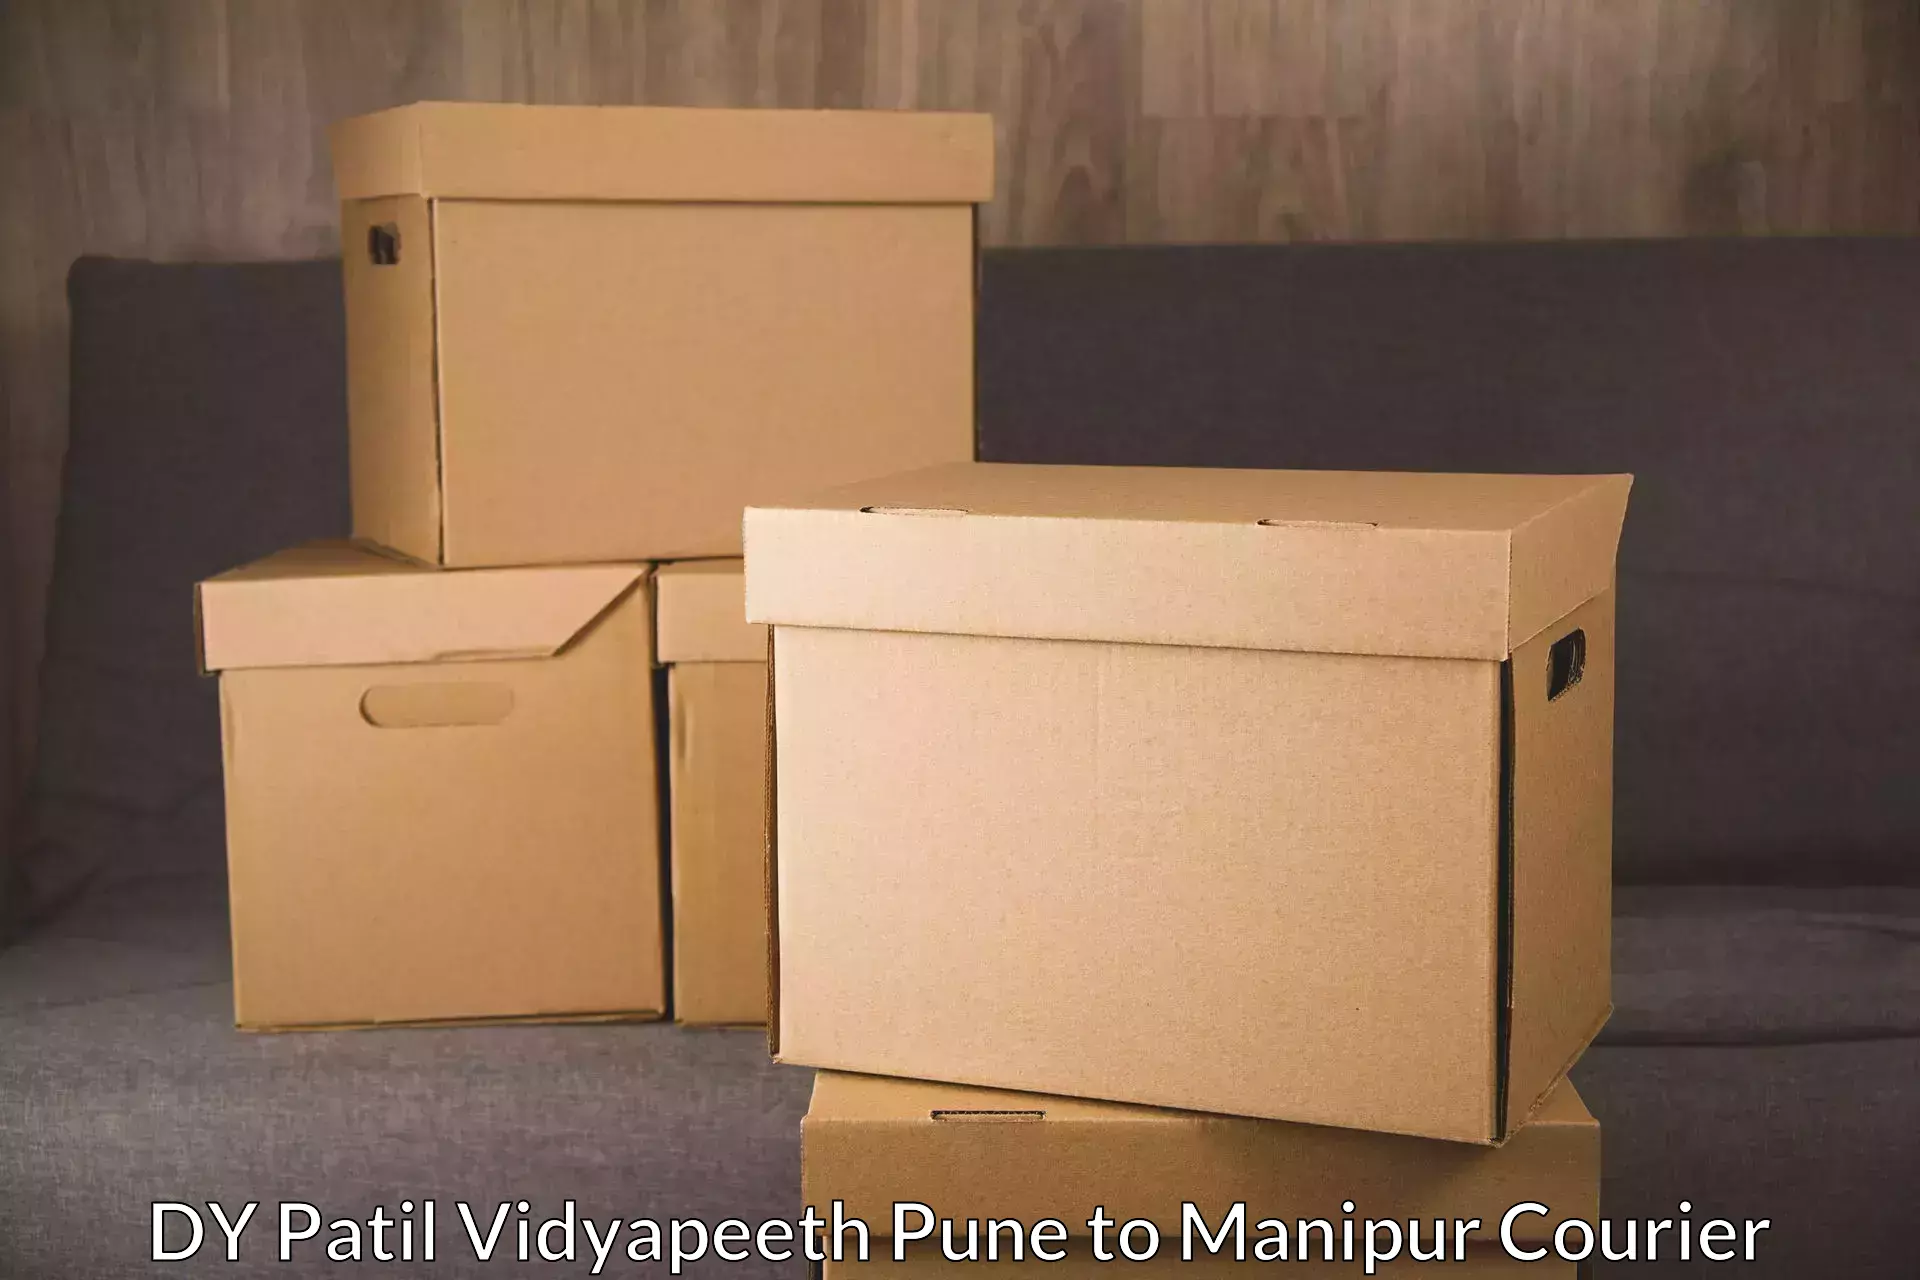 Professional parcel services DY Patil Vidyapeeth Pune to Imphal